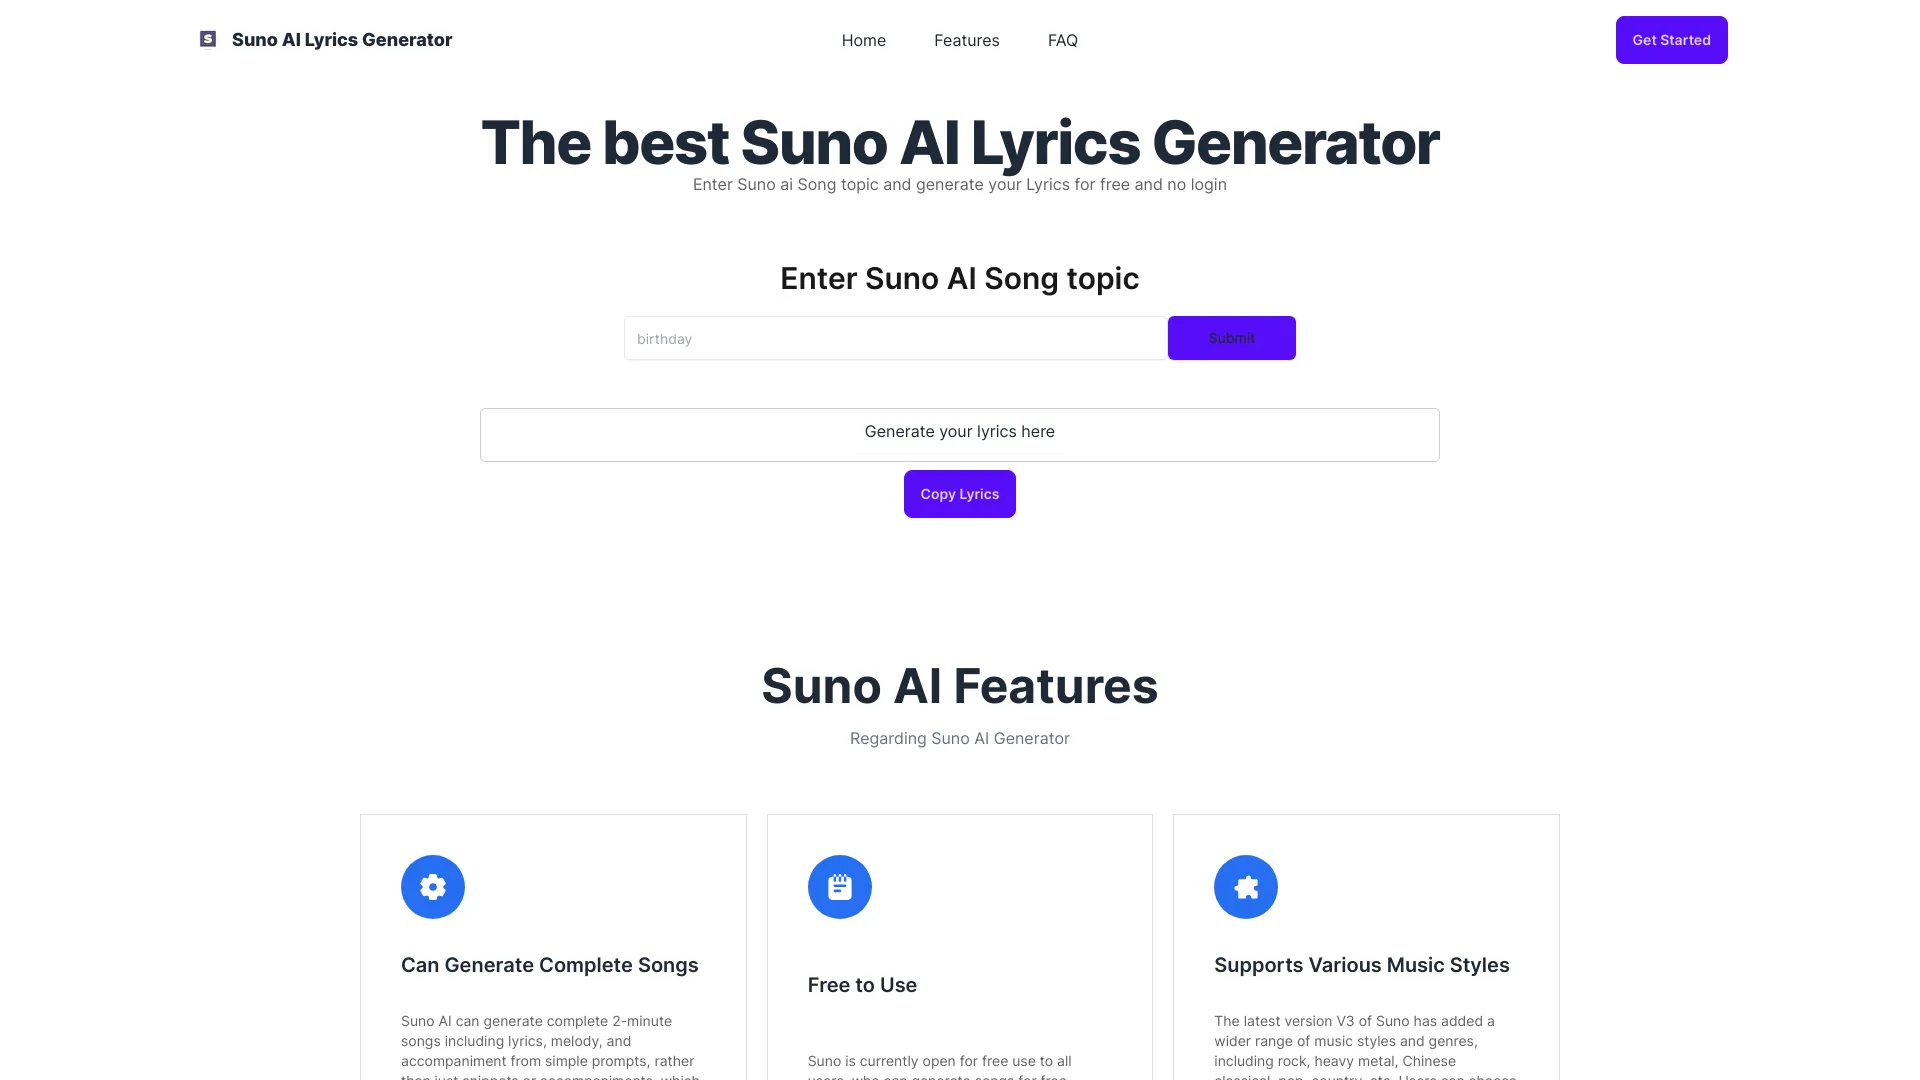 The best Suno AI Lyrics Generator